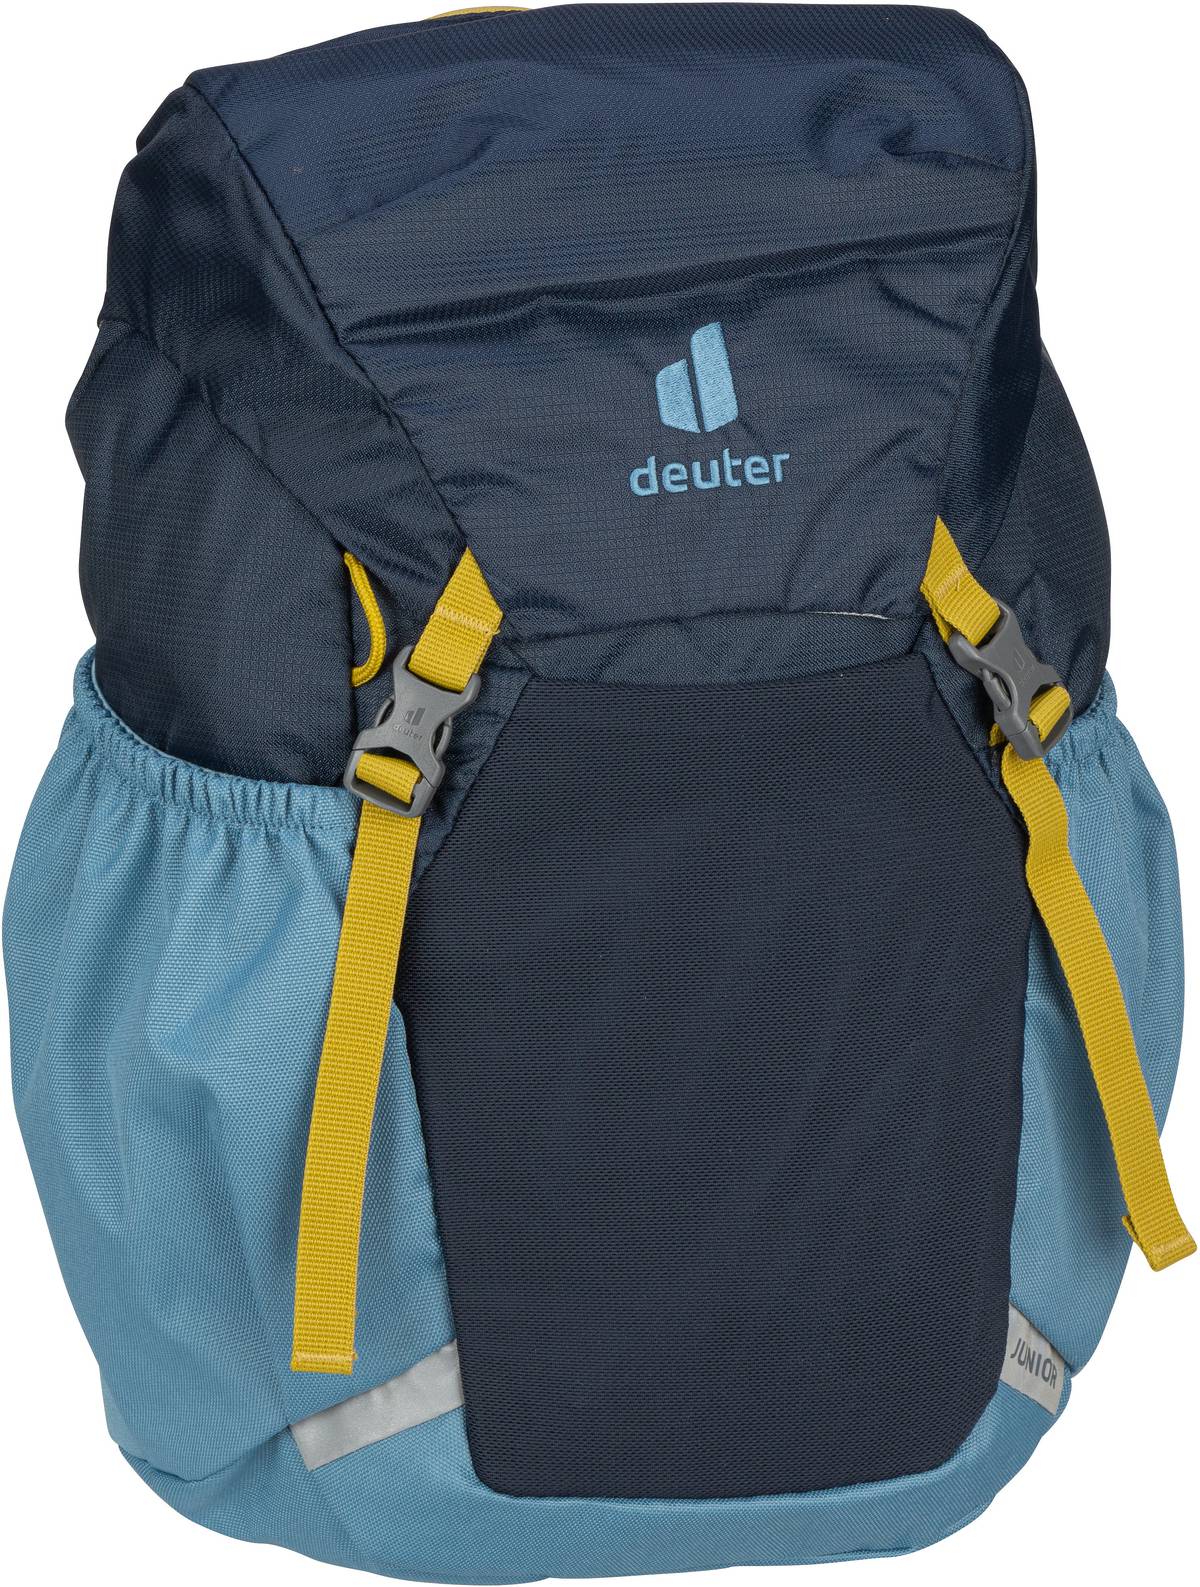 Deuter Junior  in Navy (18 Liter), Rucksack / Backpack